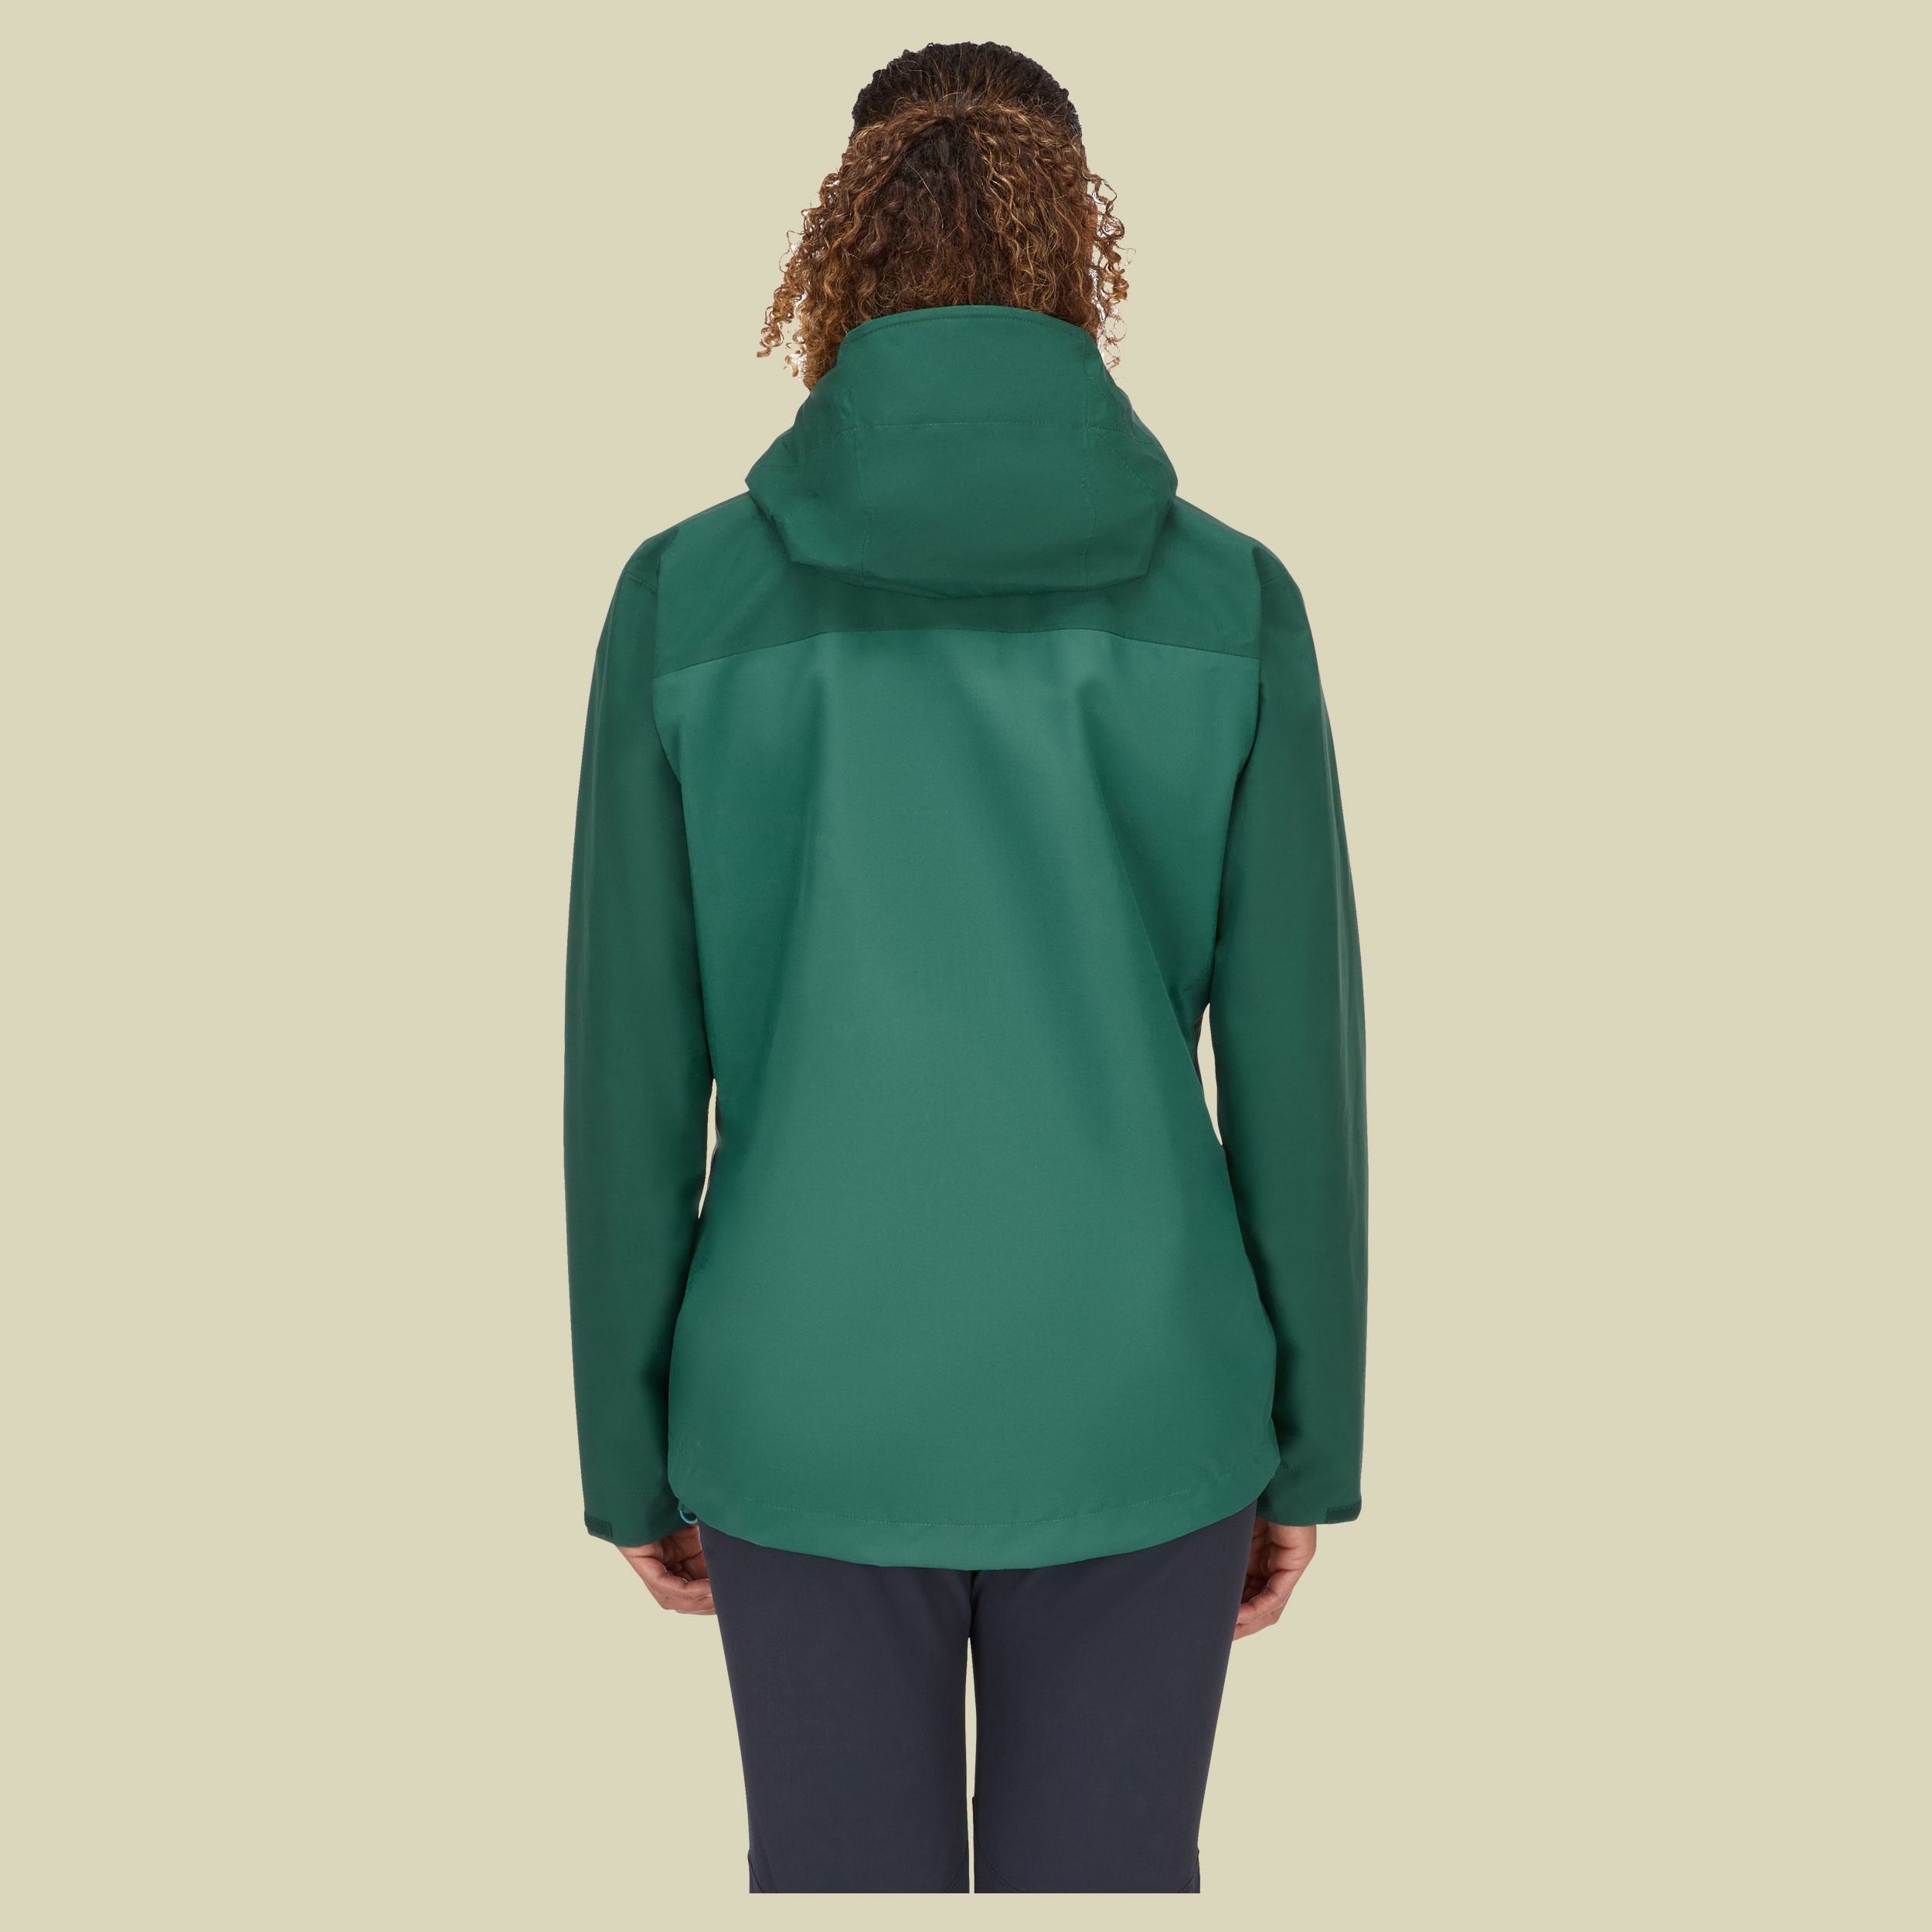 Arc Eco Jacket Women Größe 36 (08) Farbe green slate/eucalyptus